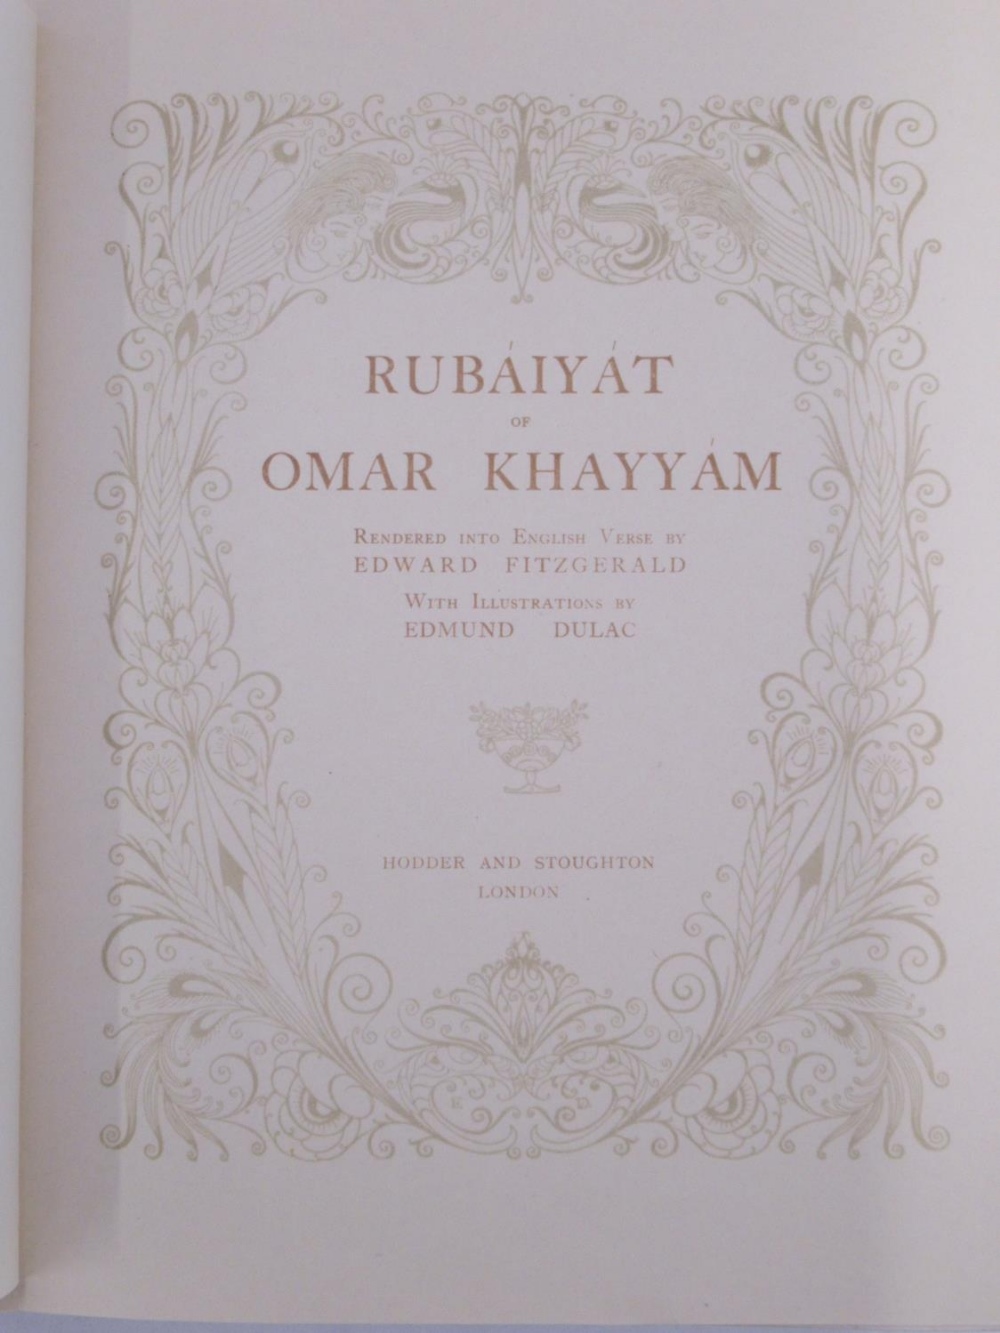 Rubaiyat of Omar Khayyam, Rendered into English Verse by Edward Fitzgerald, with Illustrations by - Image 3 of 4